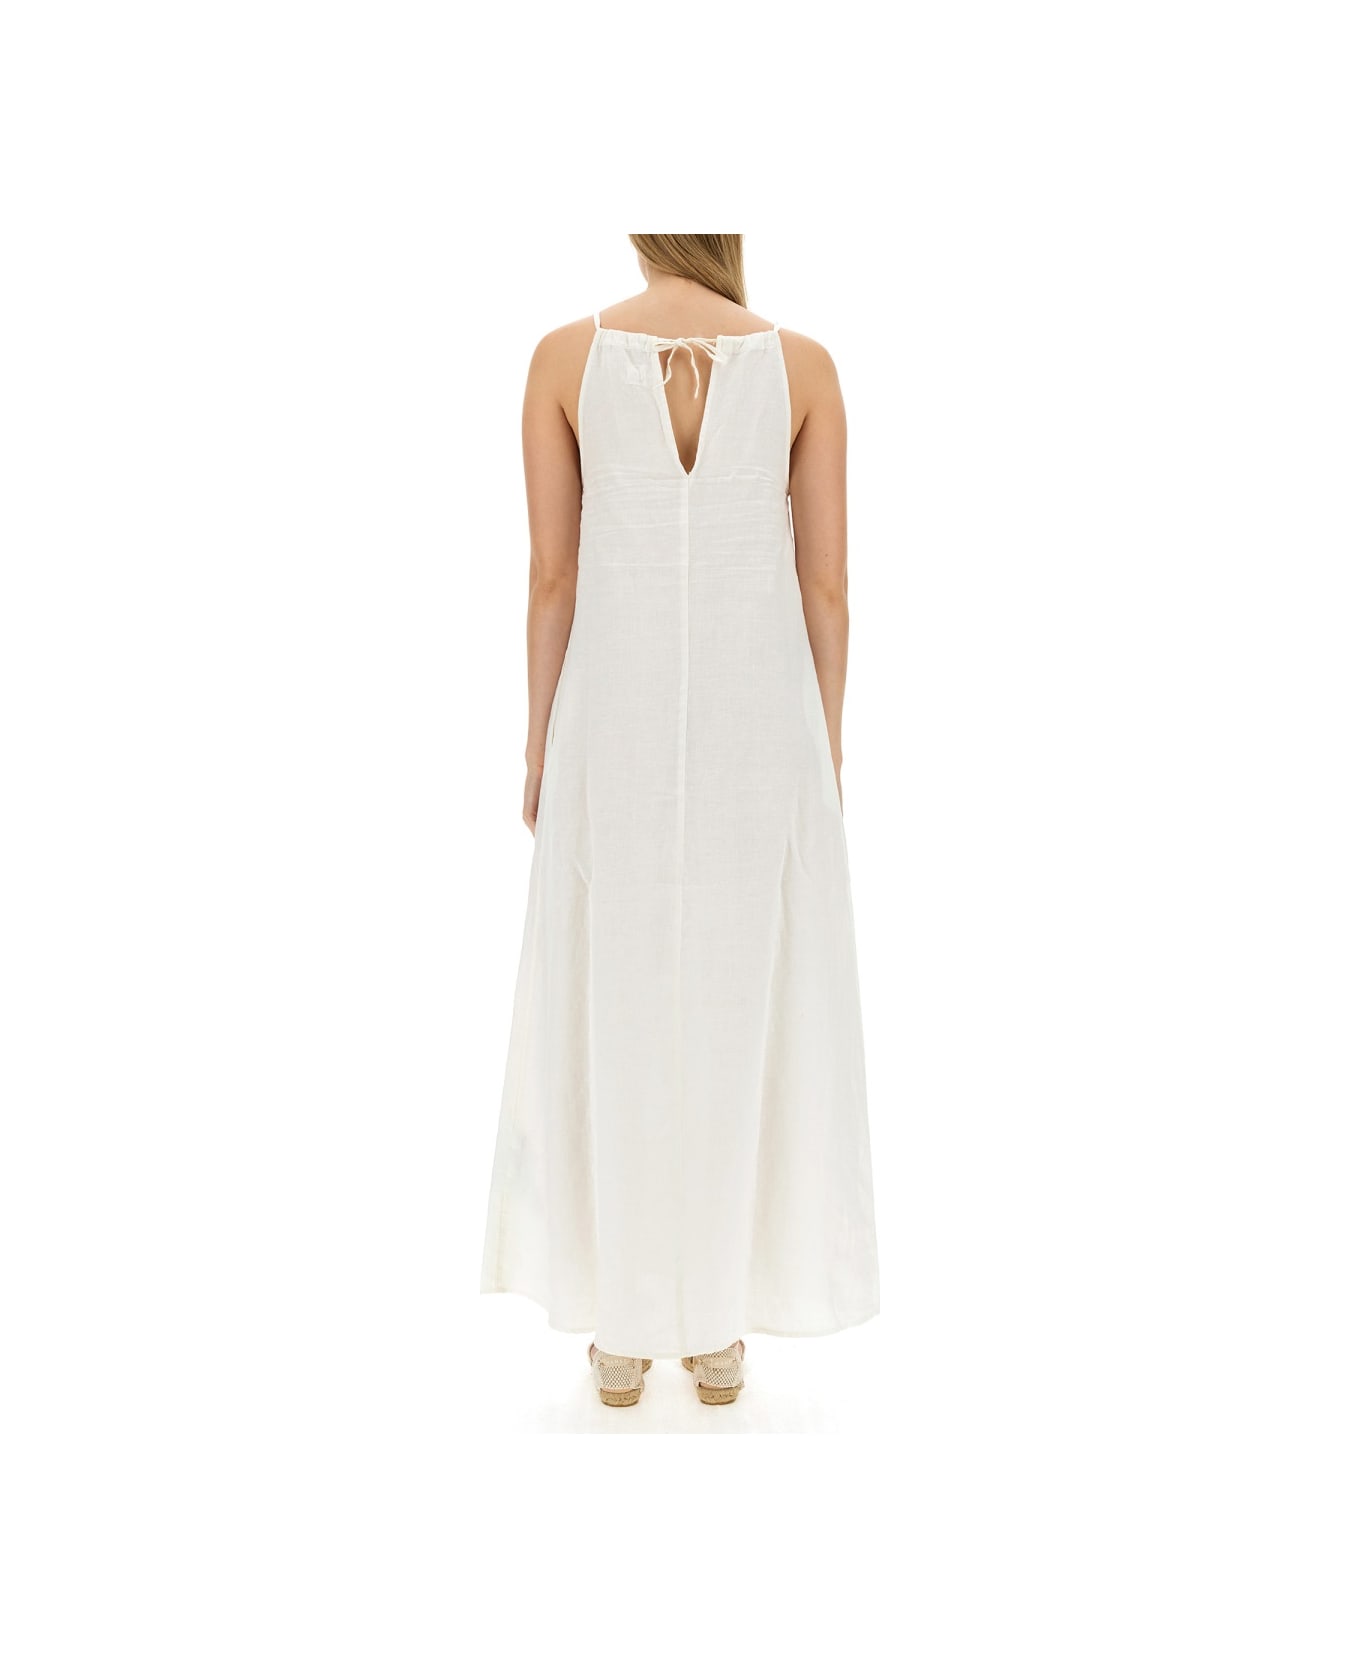 120% Lino Long Dress - IVORY